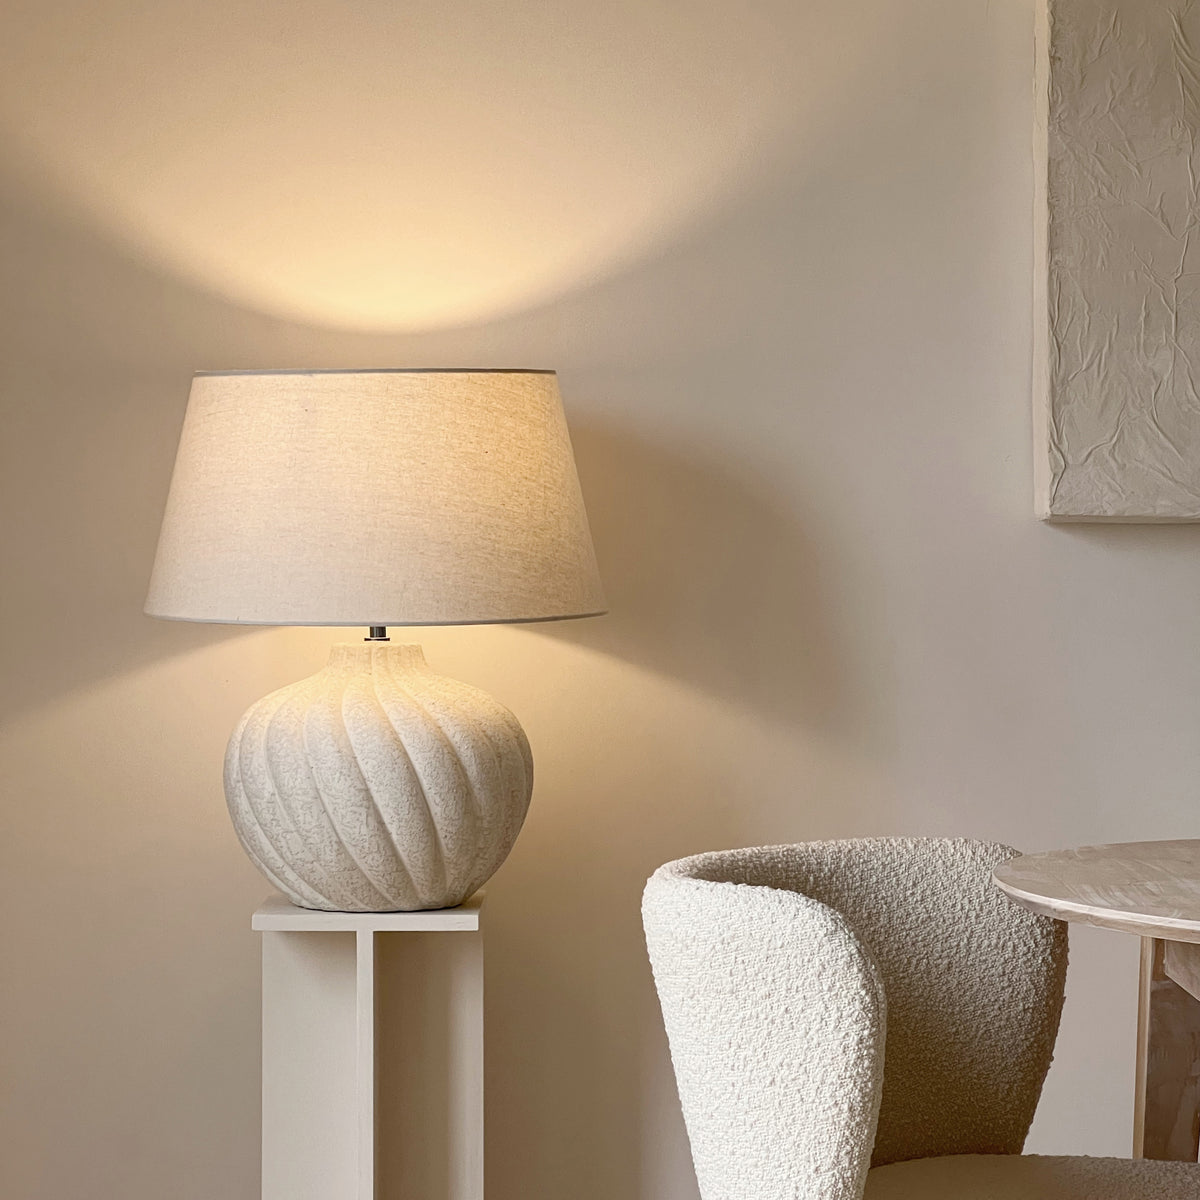 Textured ceramic based table lamp natural shade